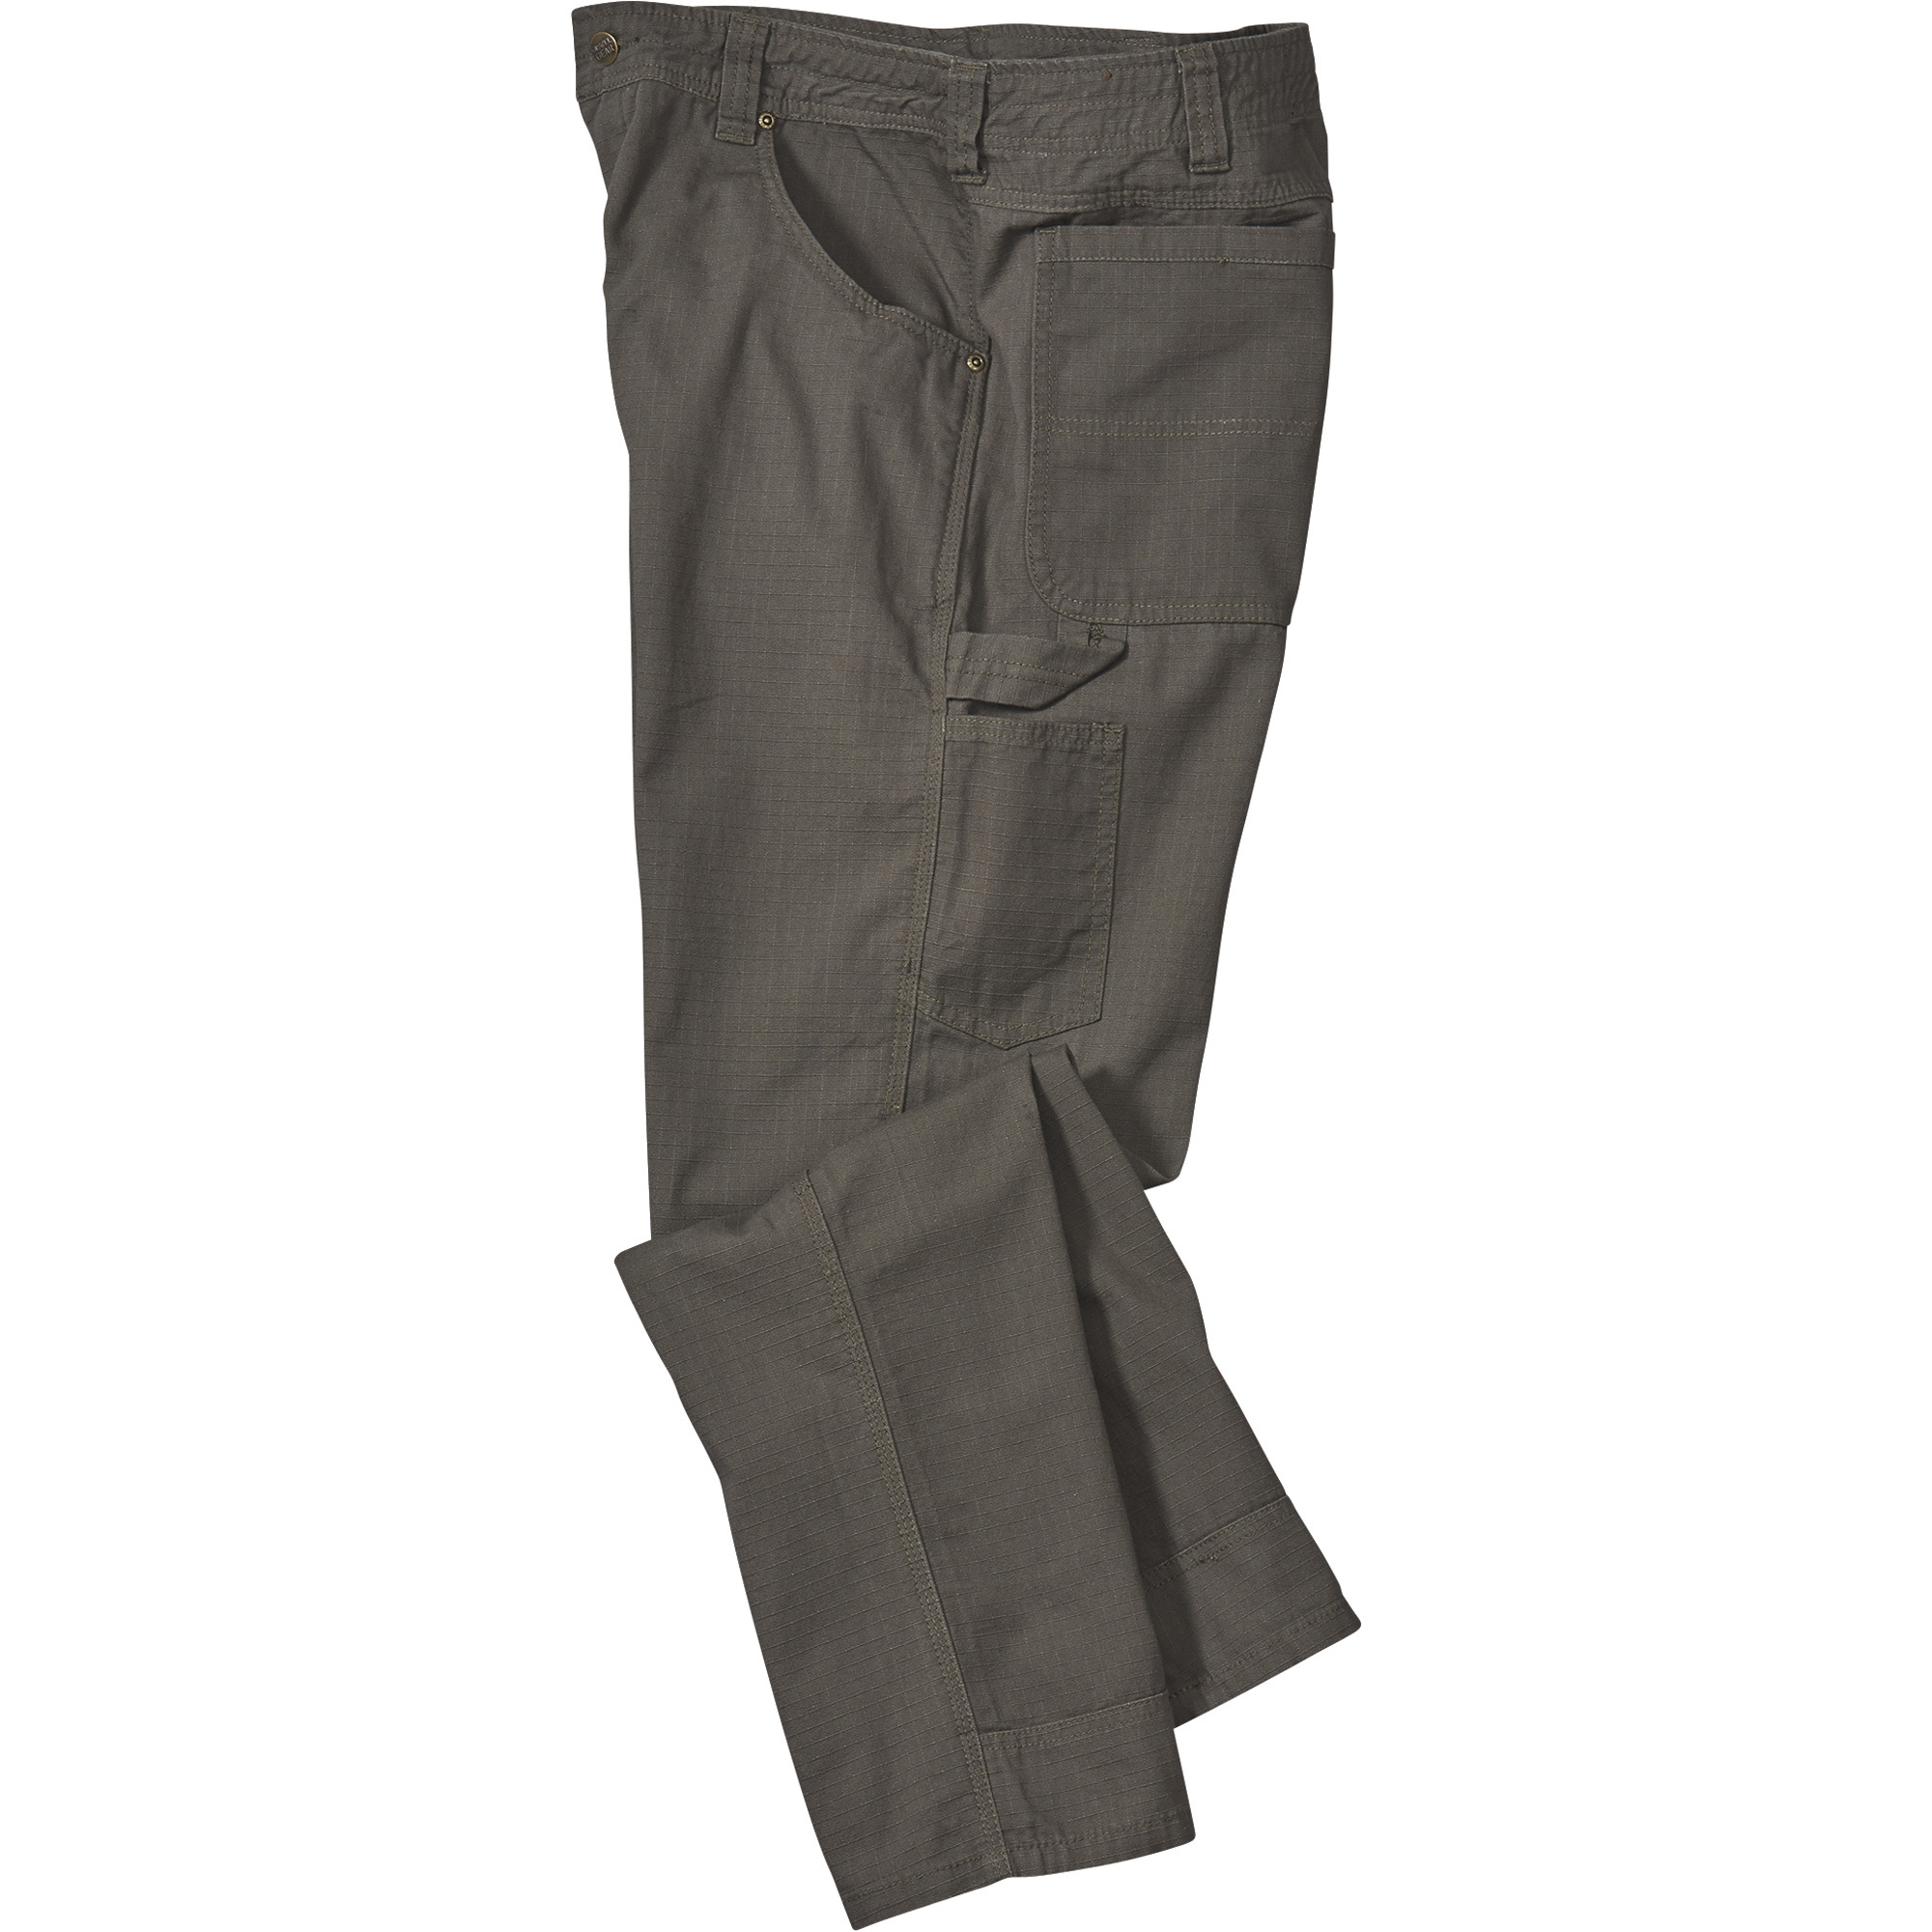 Gravel Gear Men's Cotton Ripstop Carpenter Pants with Teflon Fabric Protector â Moss, 36Inch Waist x 30Inch Inseam